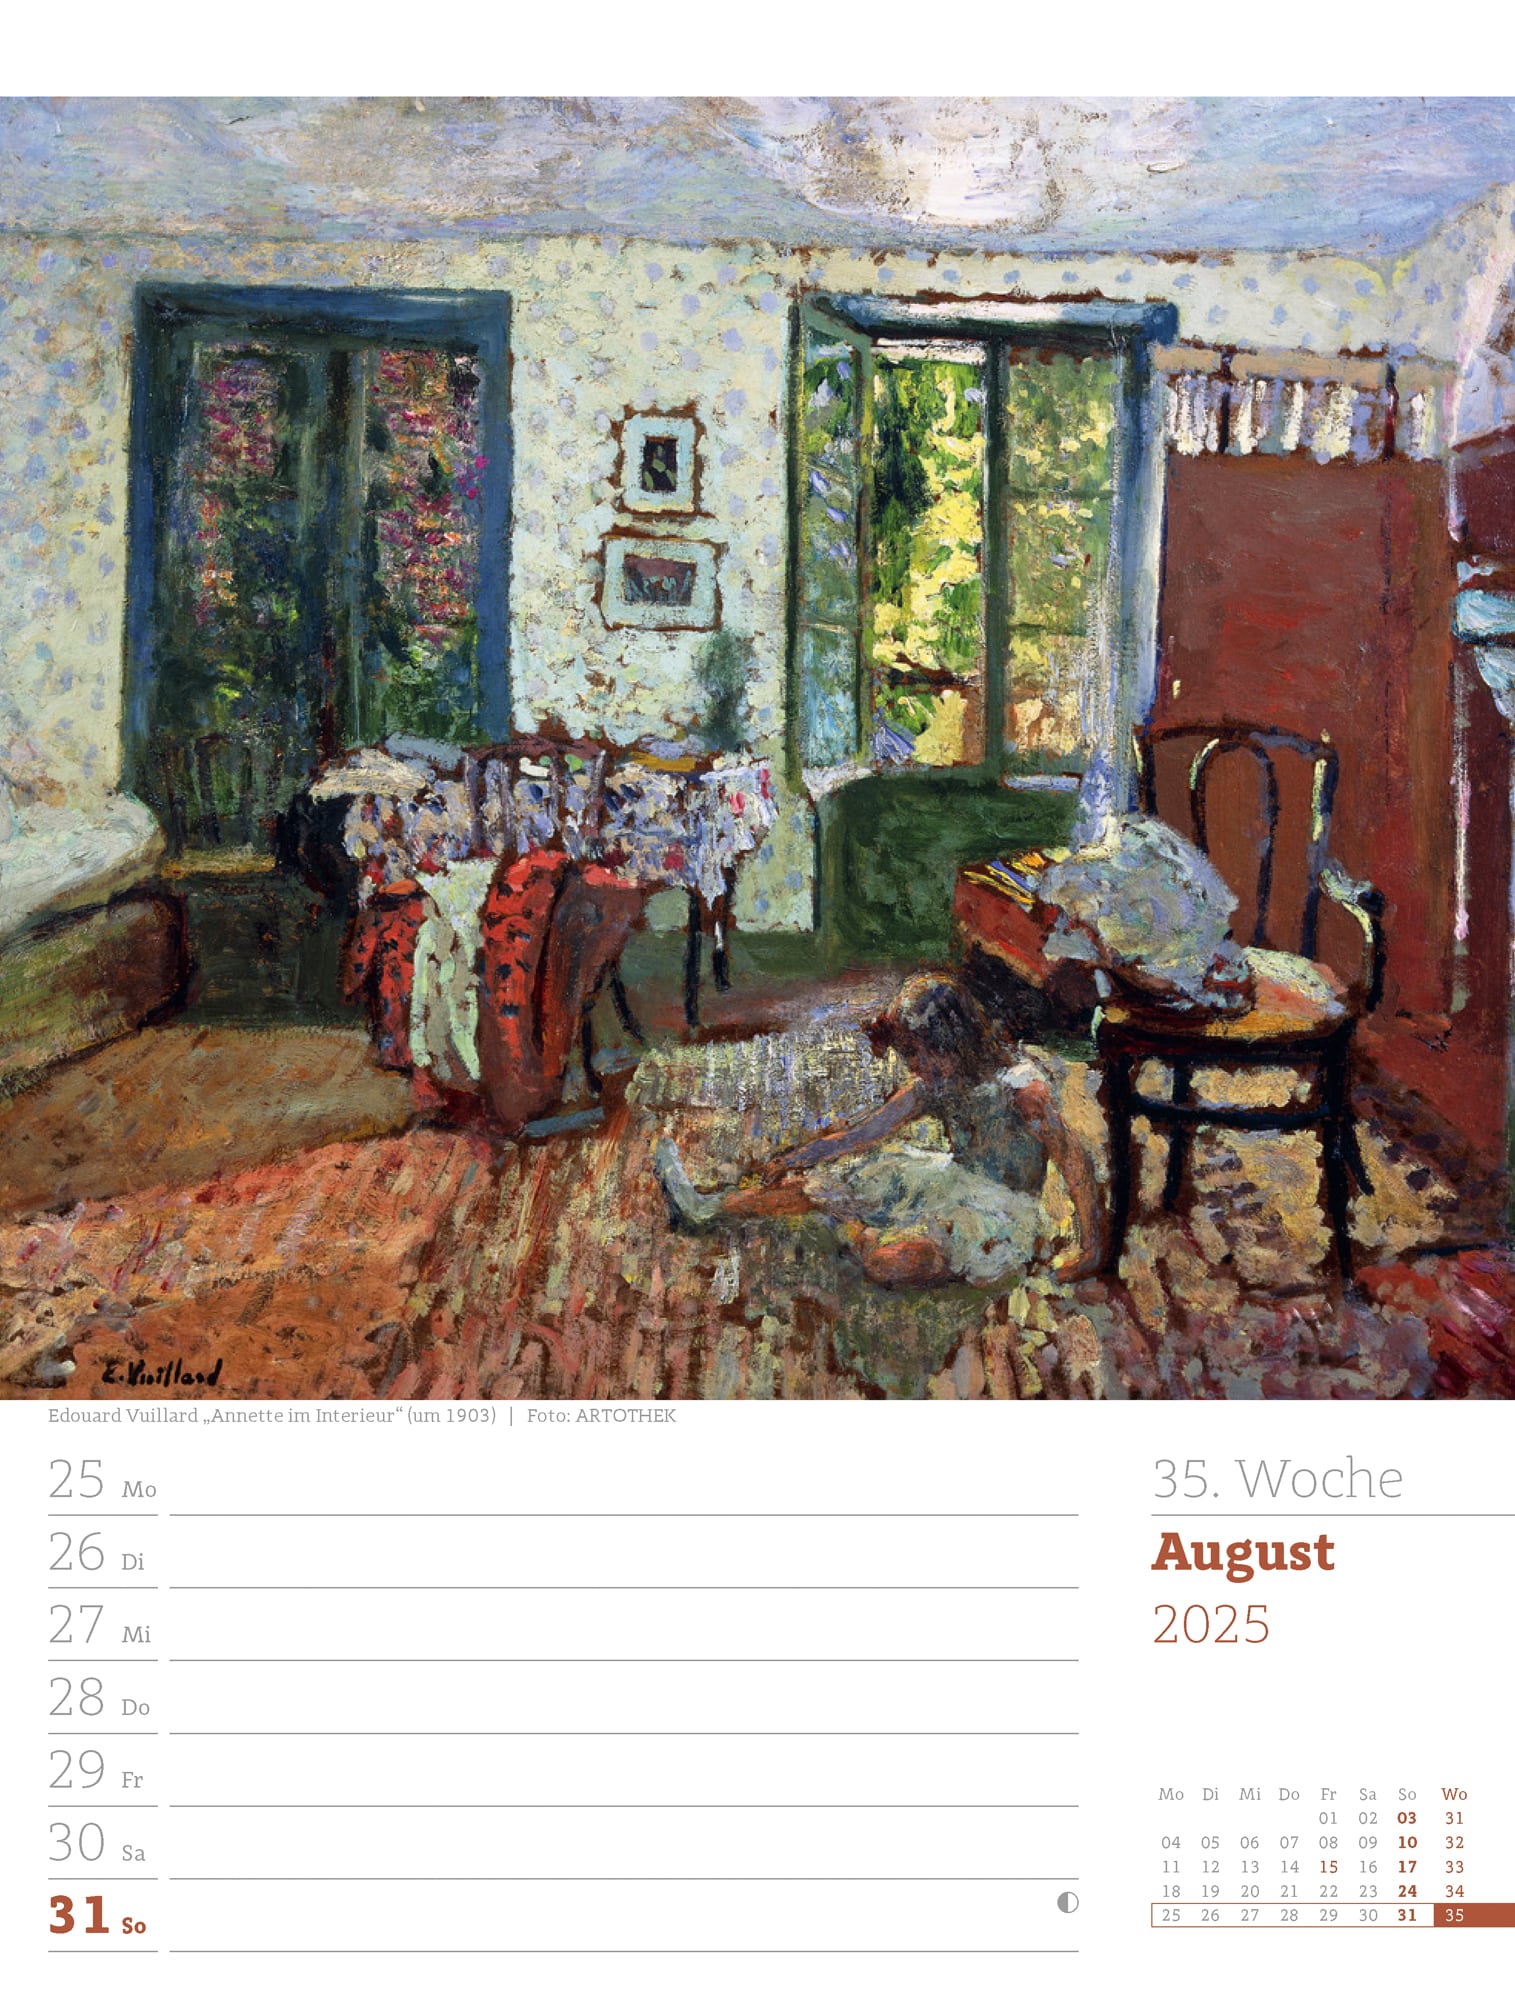 Ackermann Calendar World of Art 2025 - Weekly Planner - Inside View 38